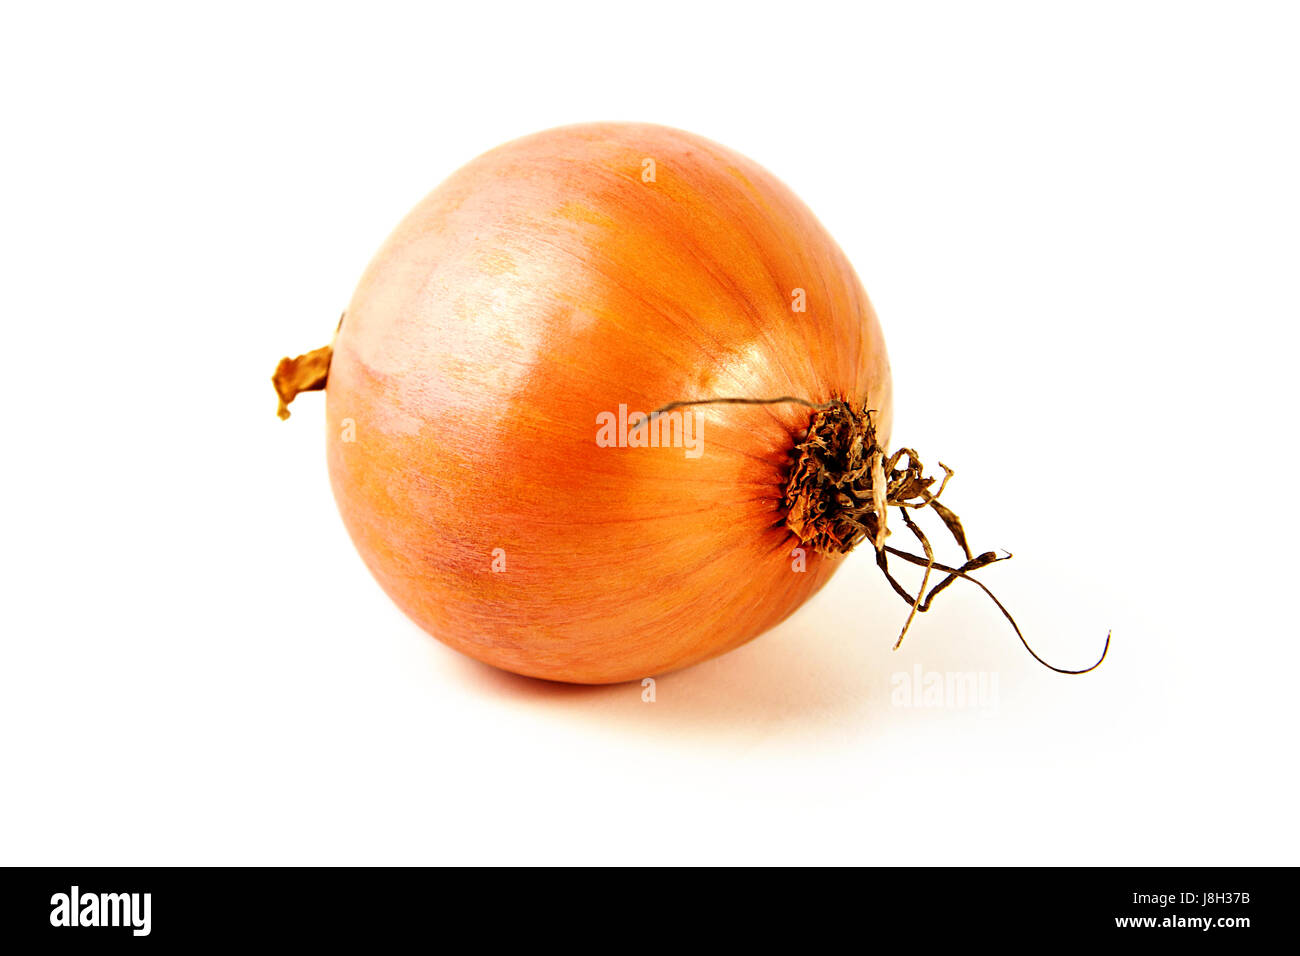 single onion isolated against white background Stock Photo